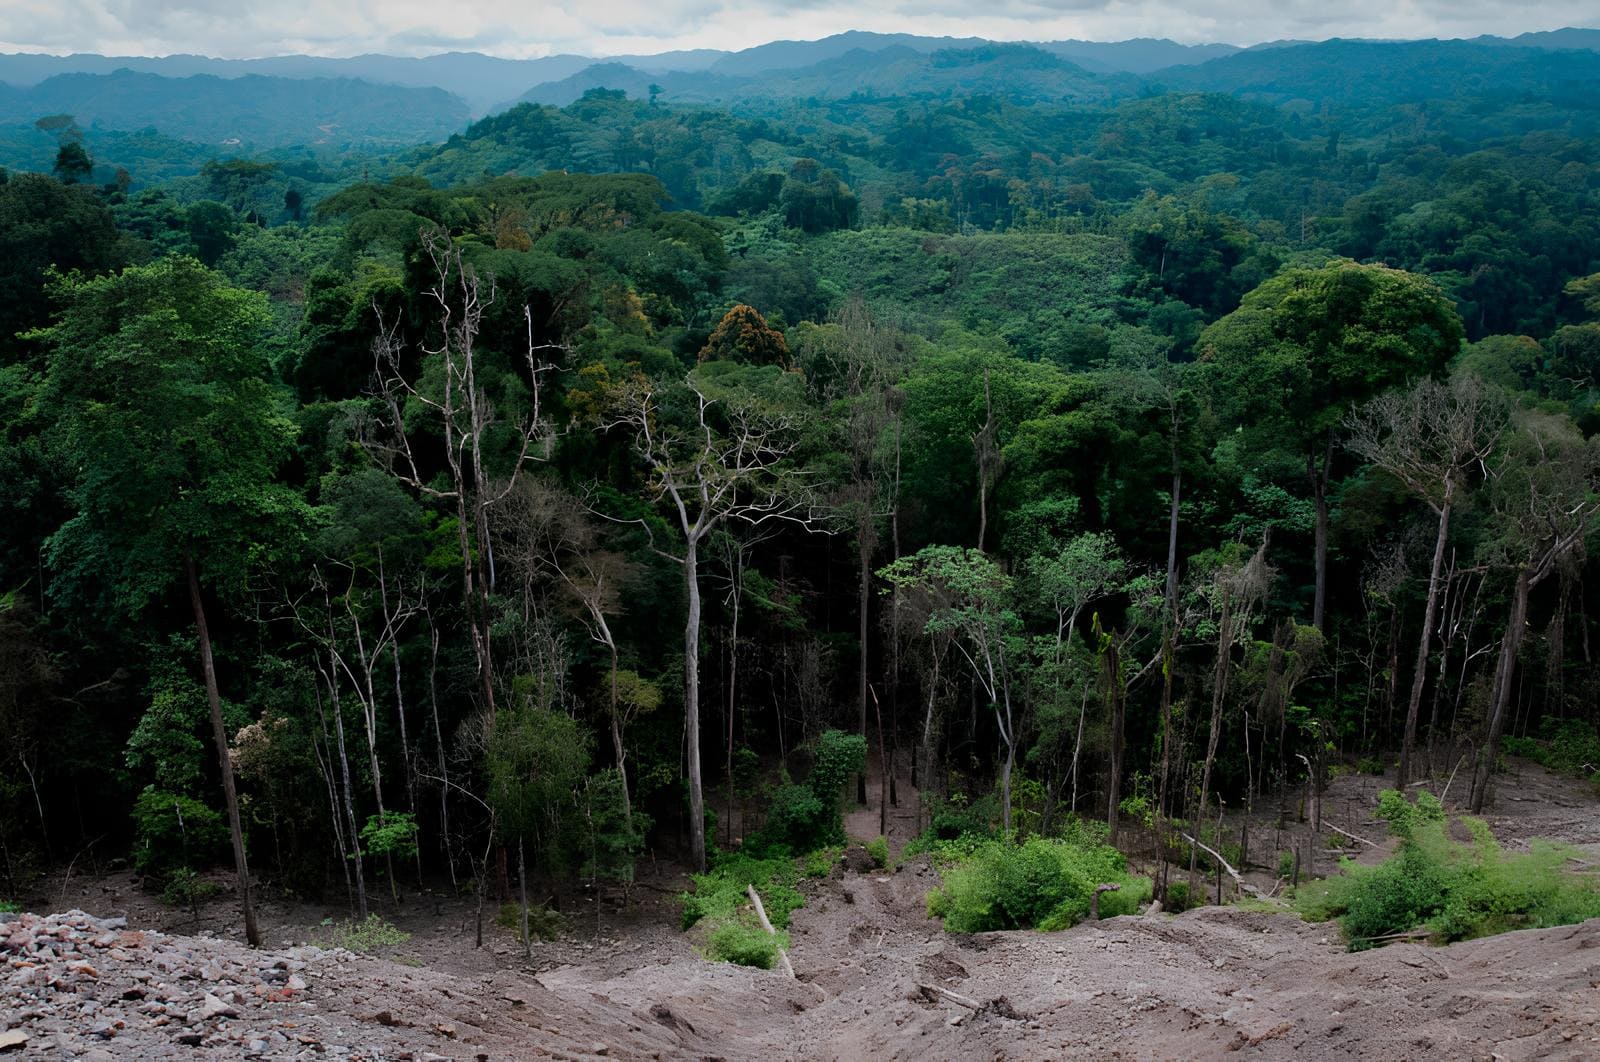 The Congo Basin Amazon forest